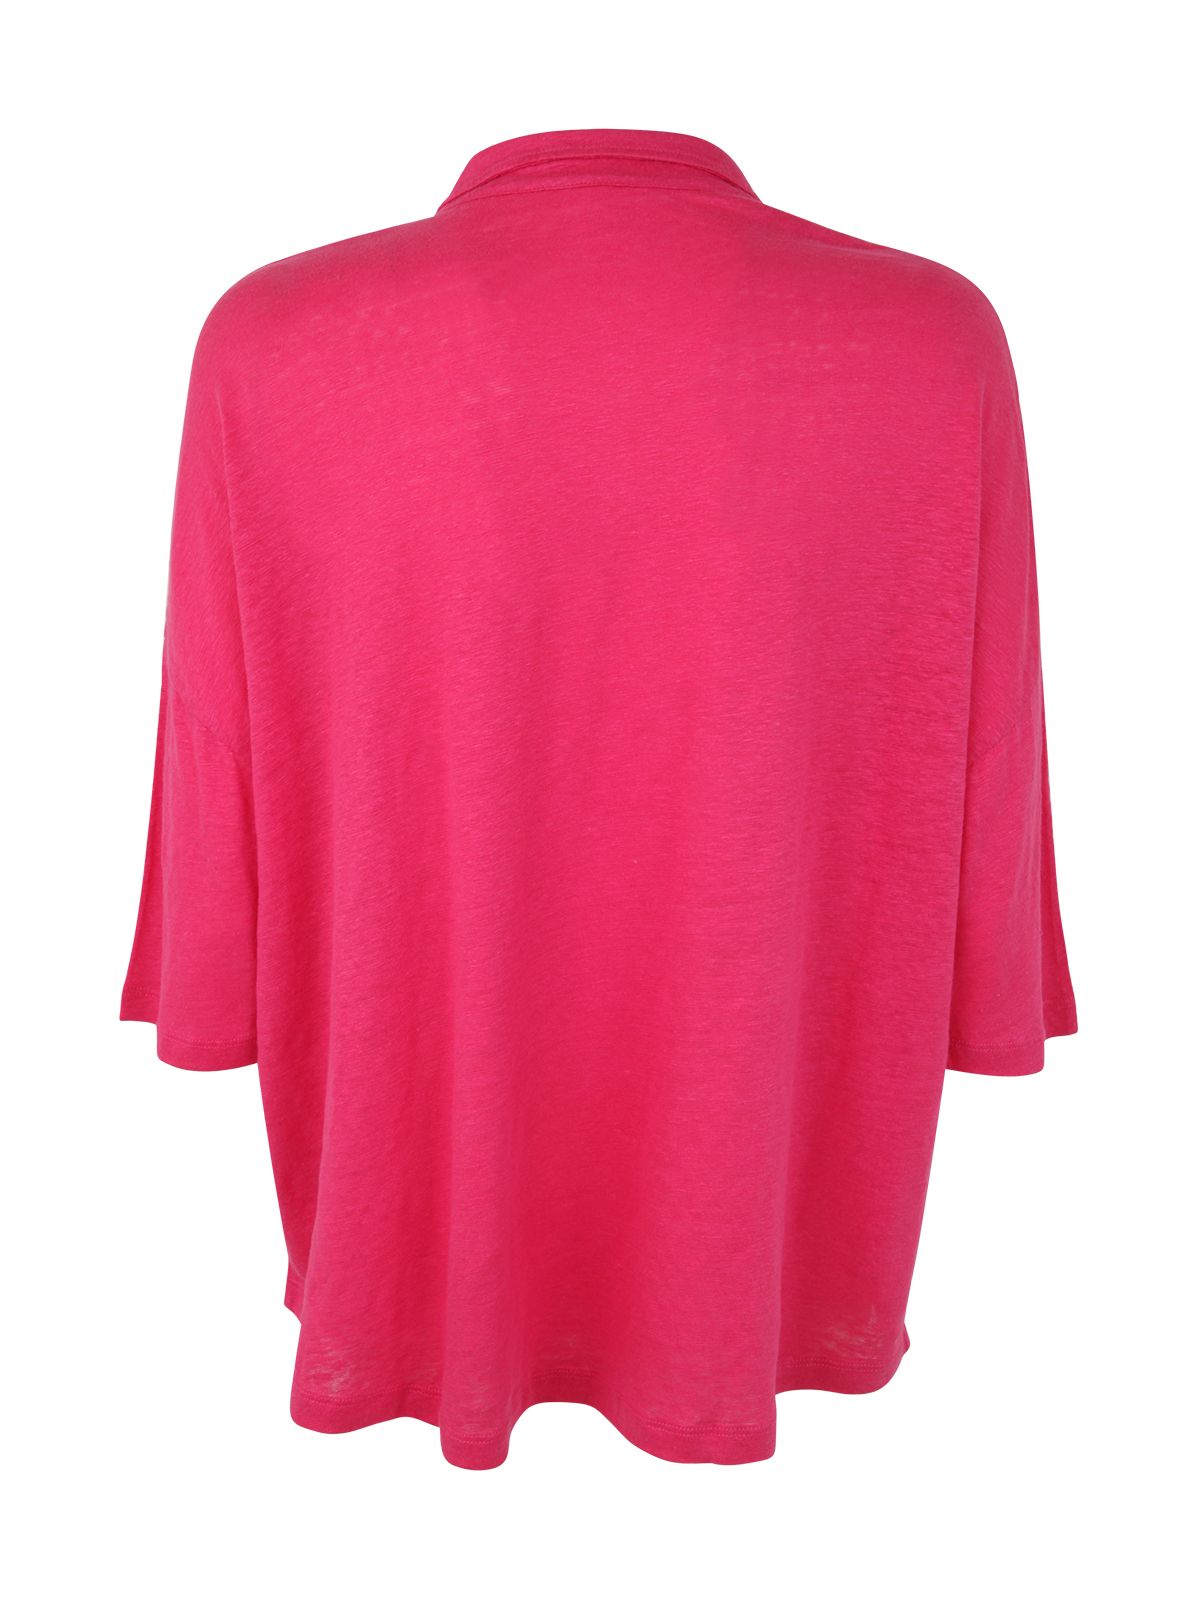 Shop Majestic Women's Shirts: 3/4 Sleeves